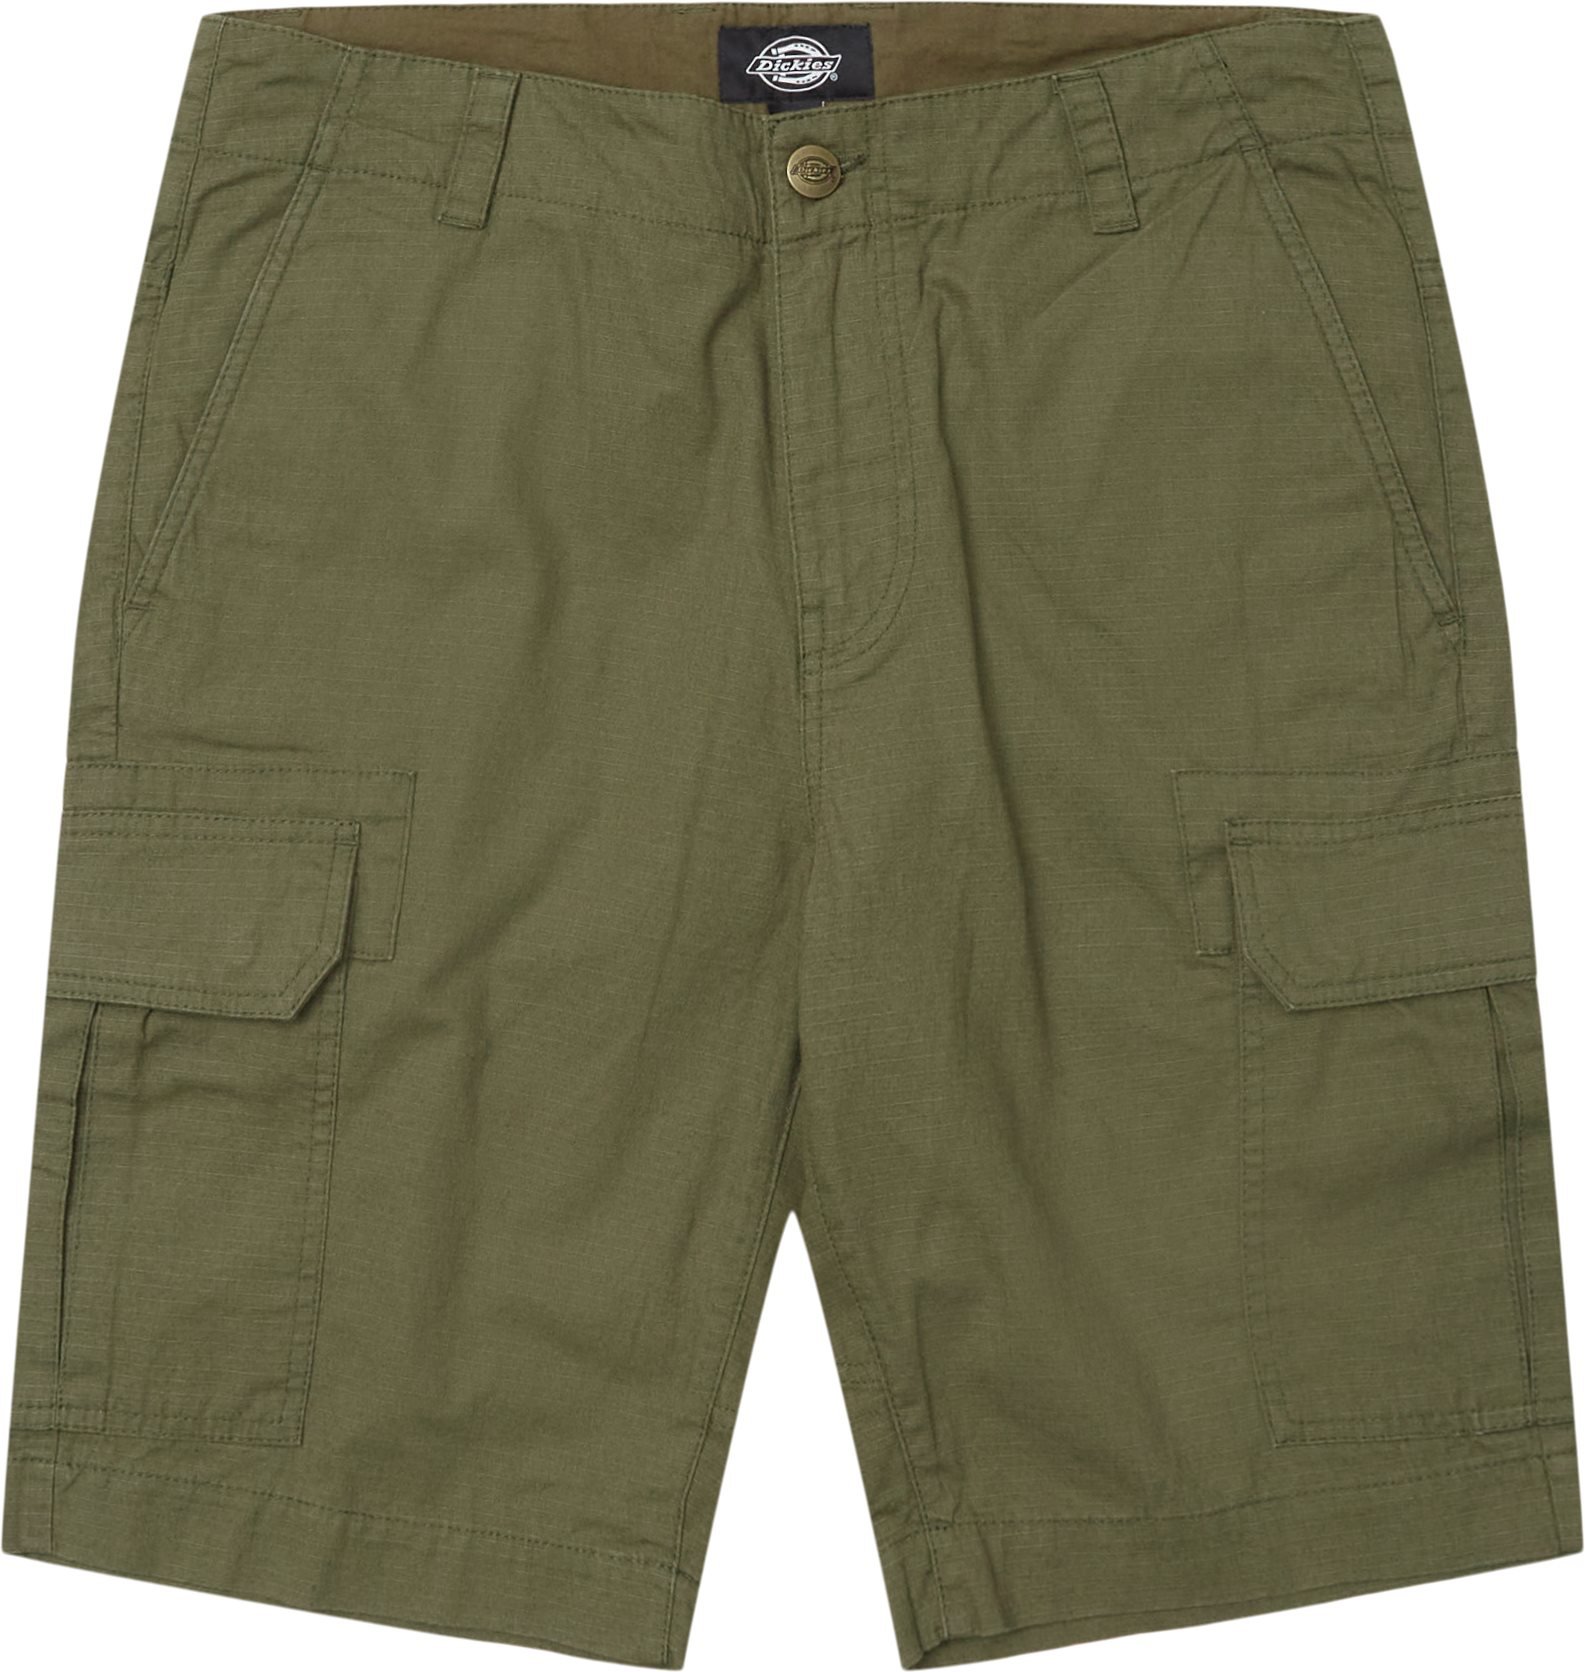 New York Shorts - Shorts - Regular fit - Army